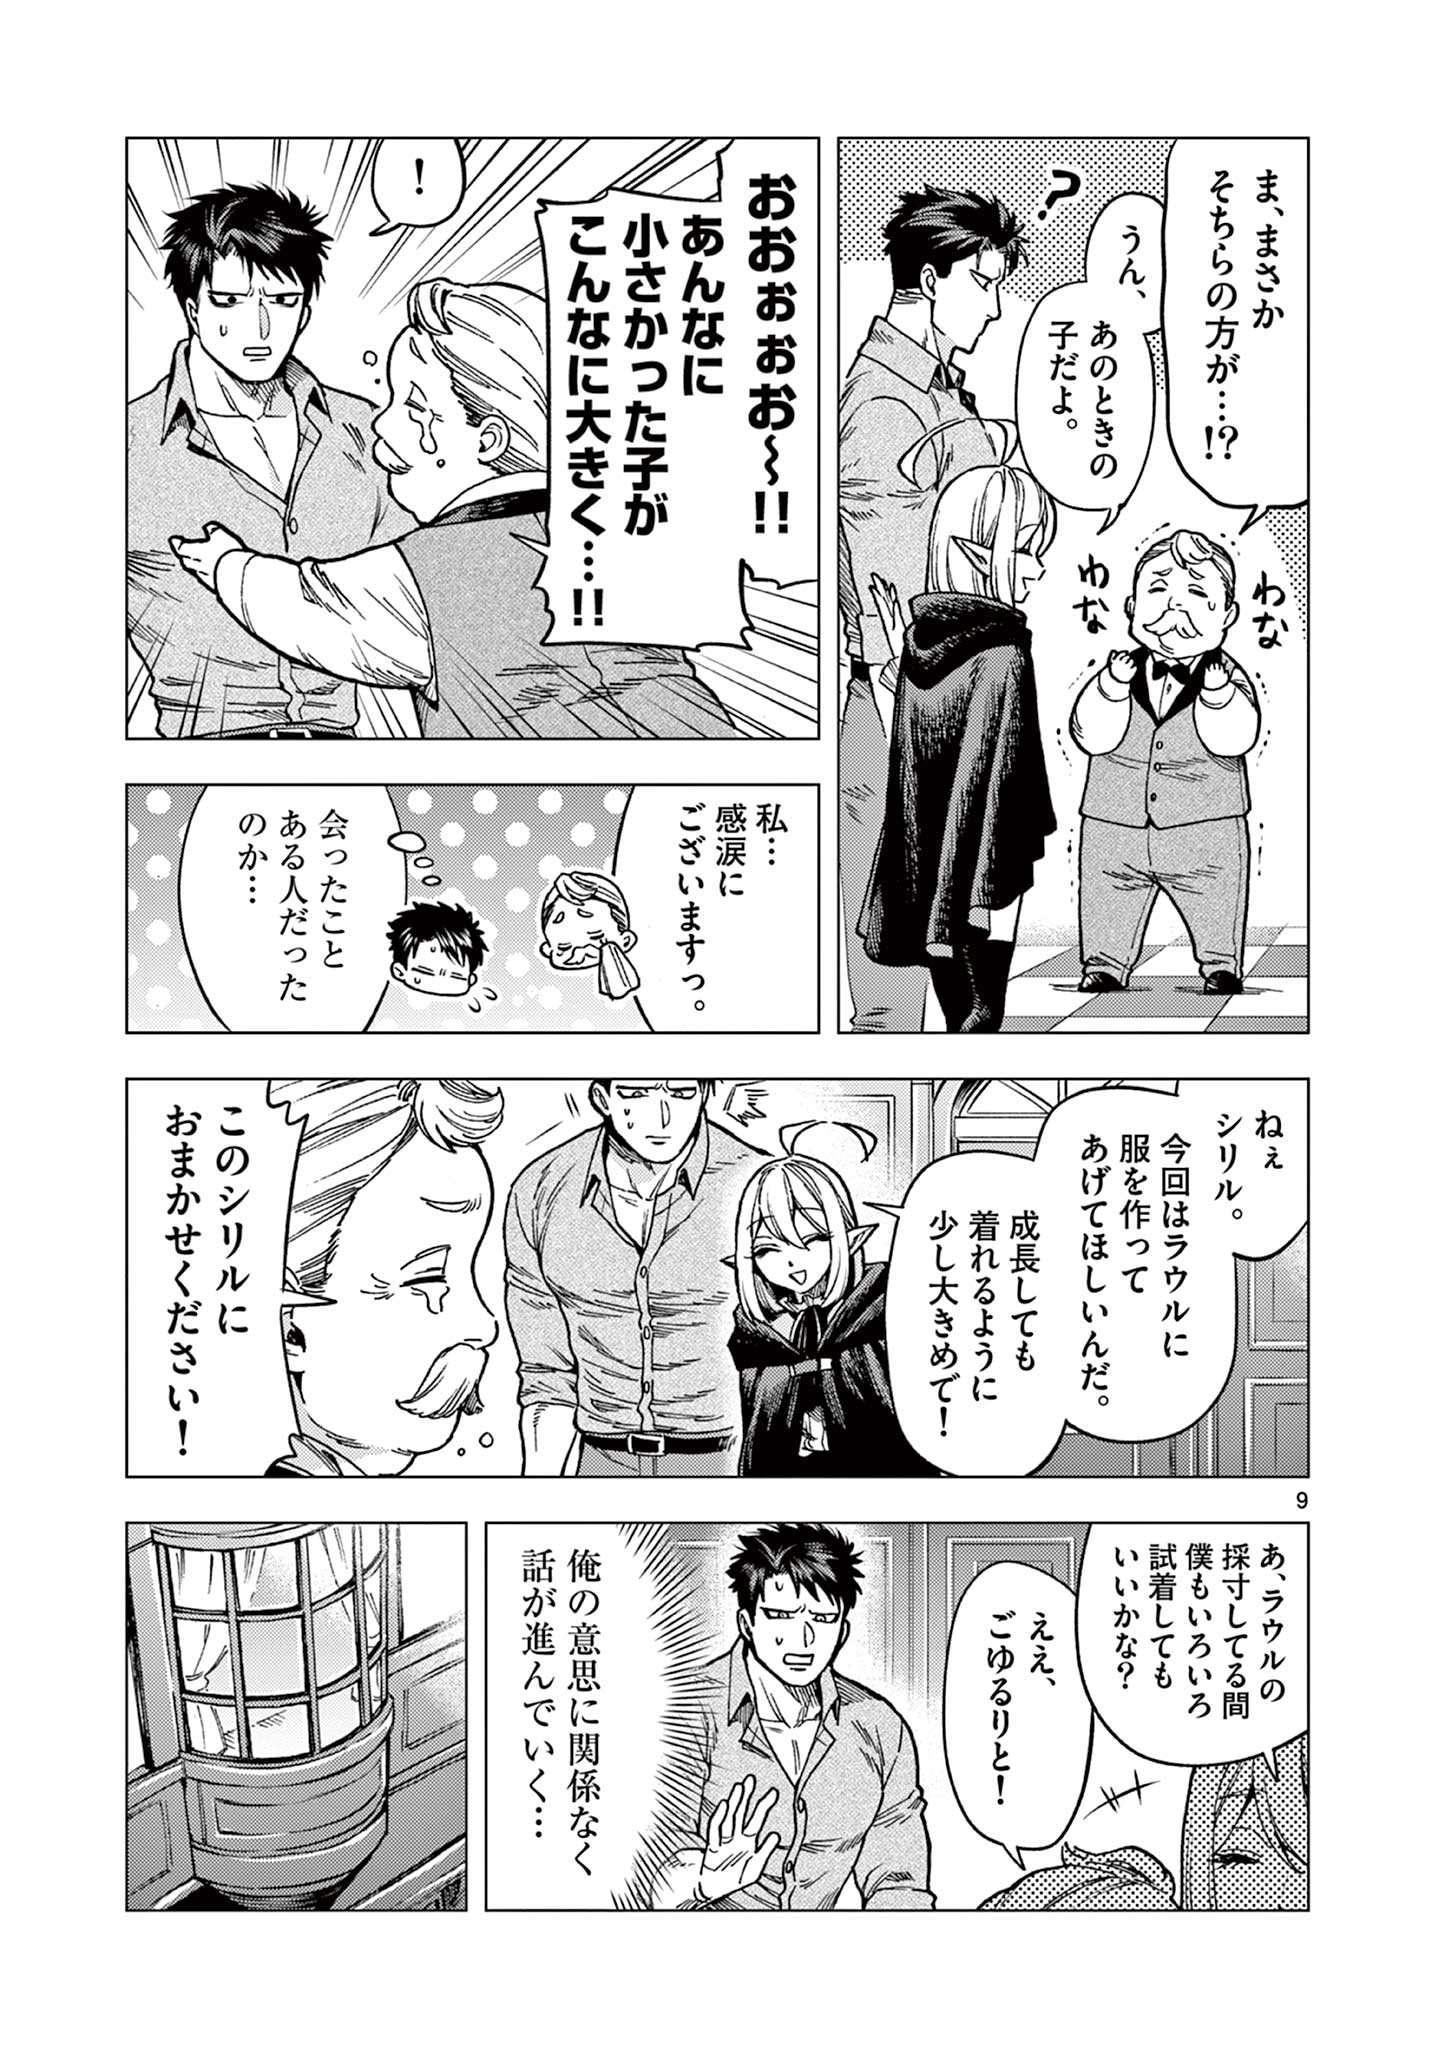 Raul to Kyuuketsuki - Chapter 3 - Page 9